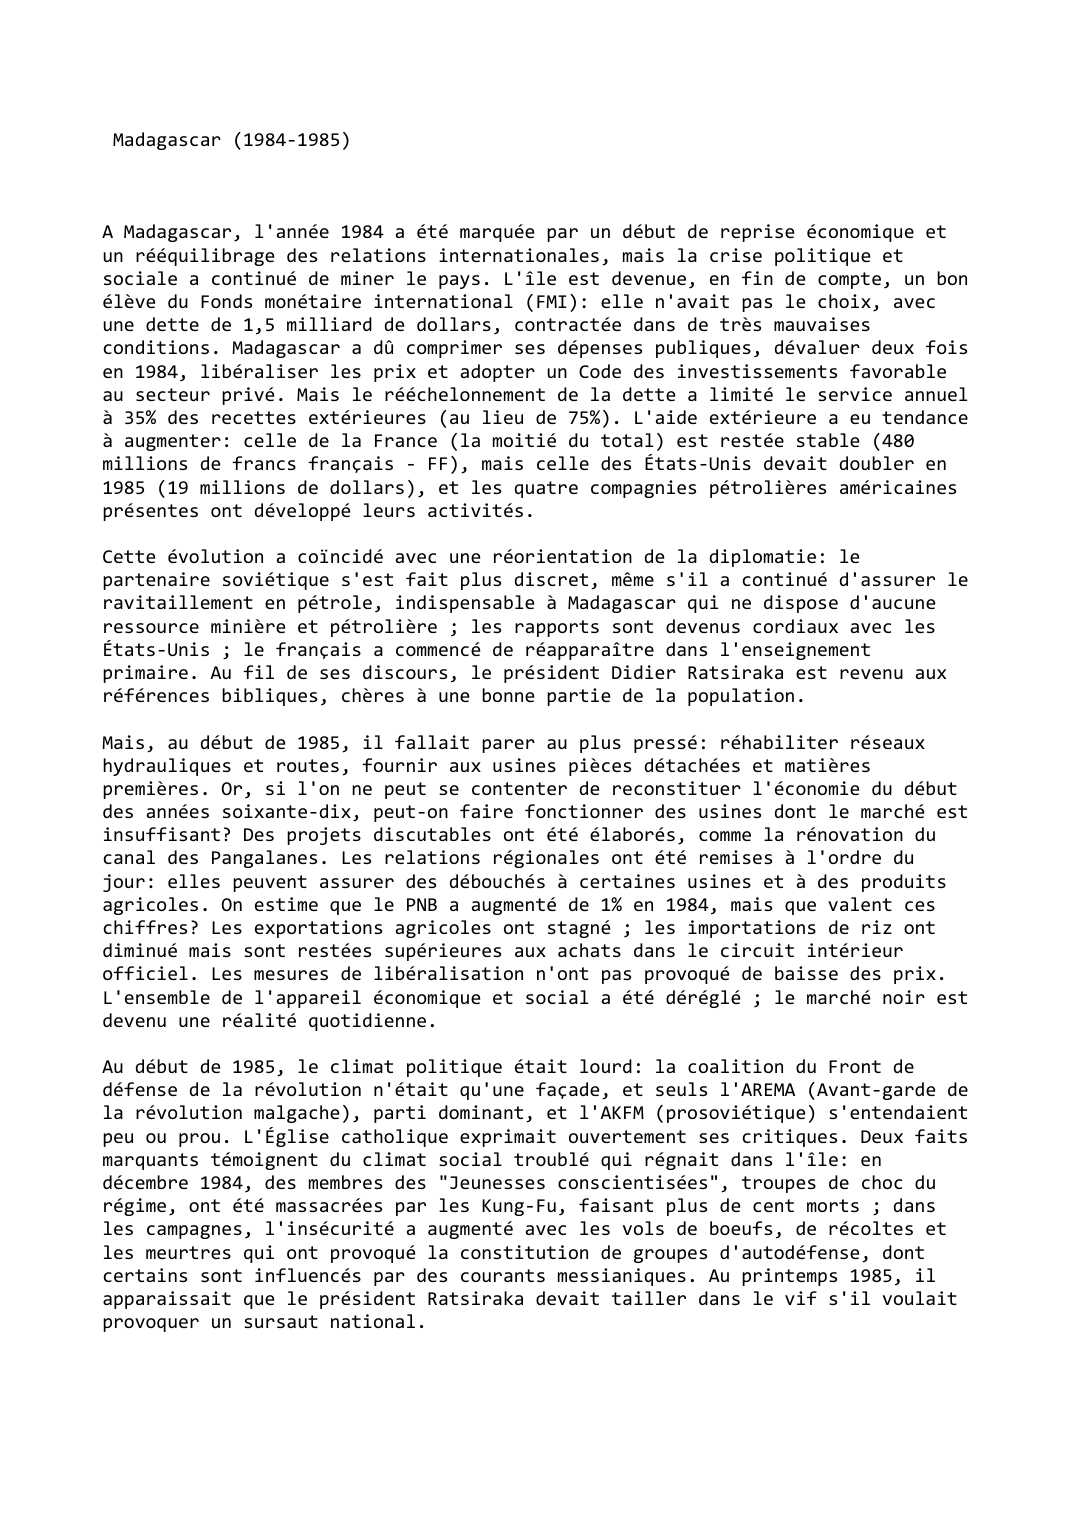 Prévisualisation du document Madagascar (1984-1985)